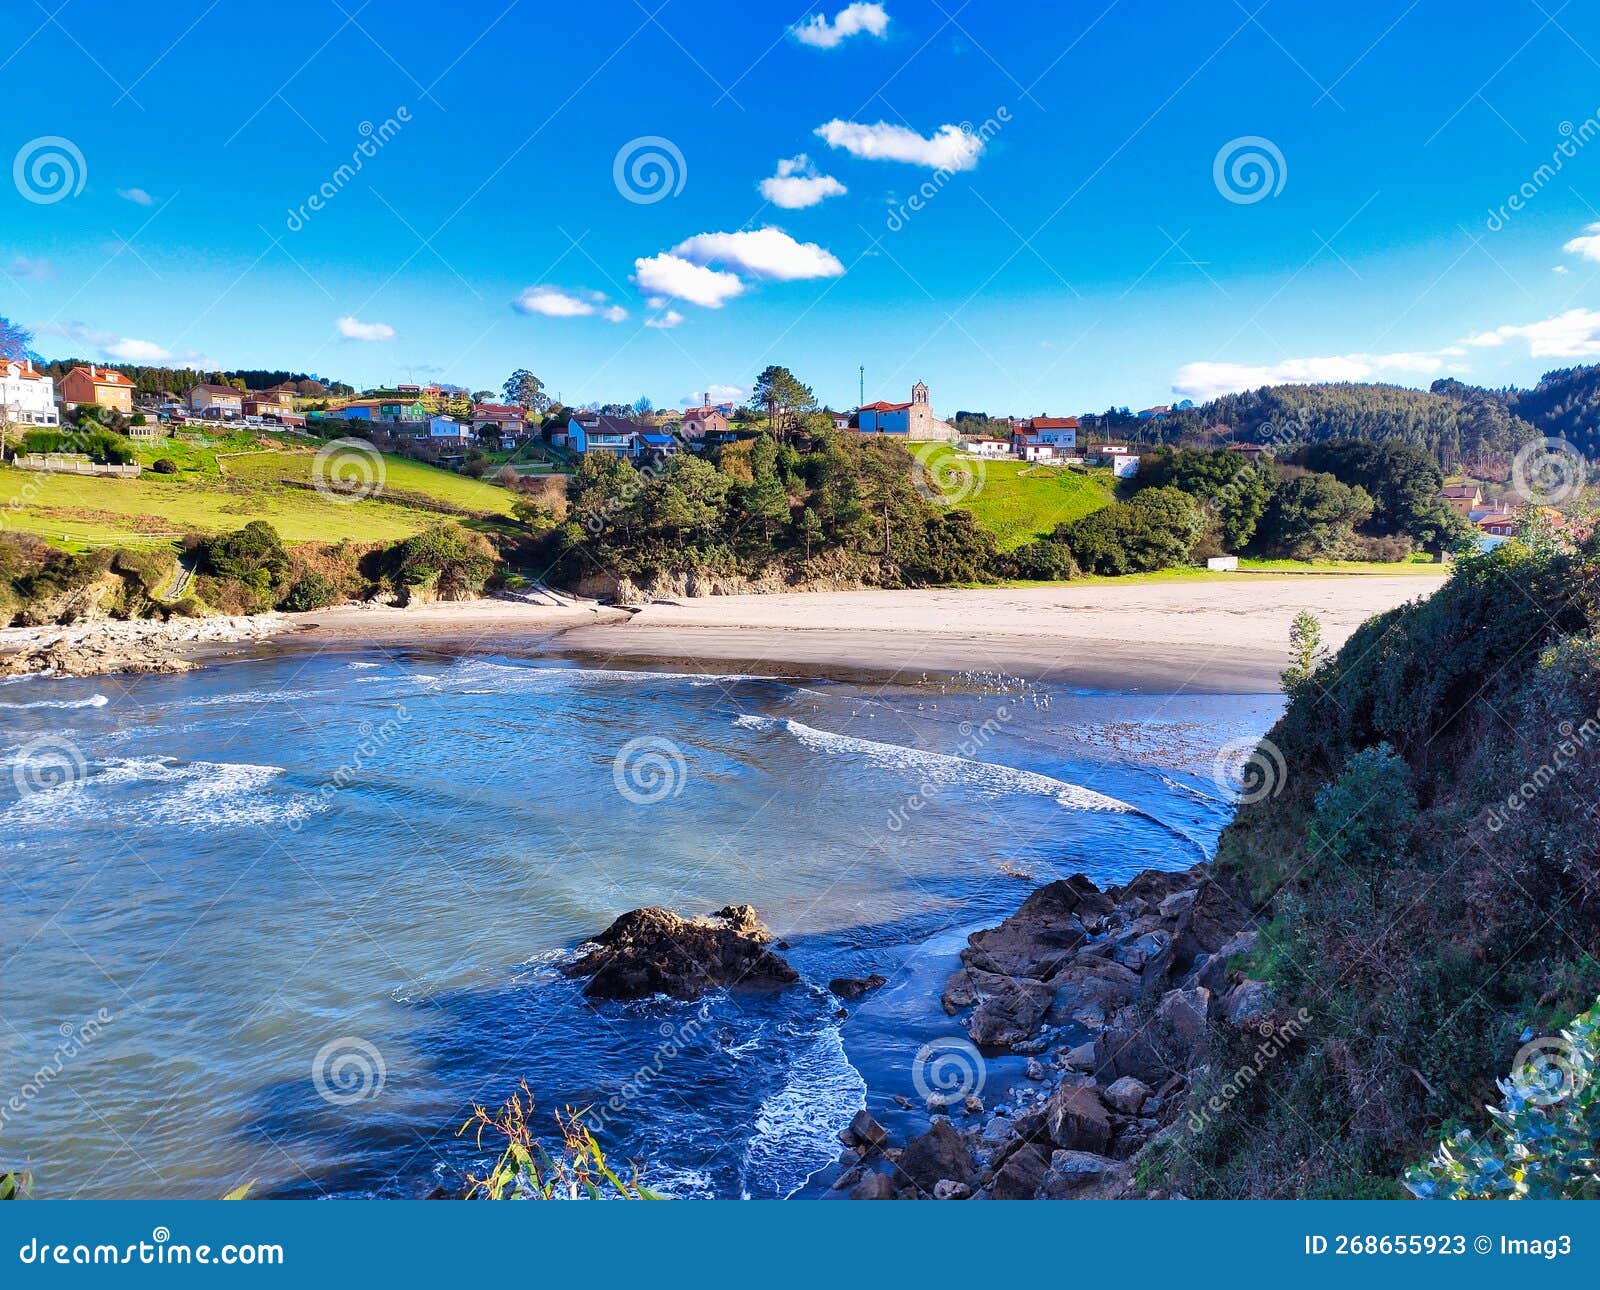 santa maria del mar beach and village, catrillon municipality, asturias, spain